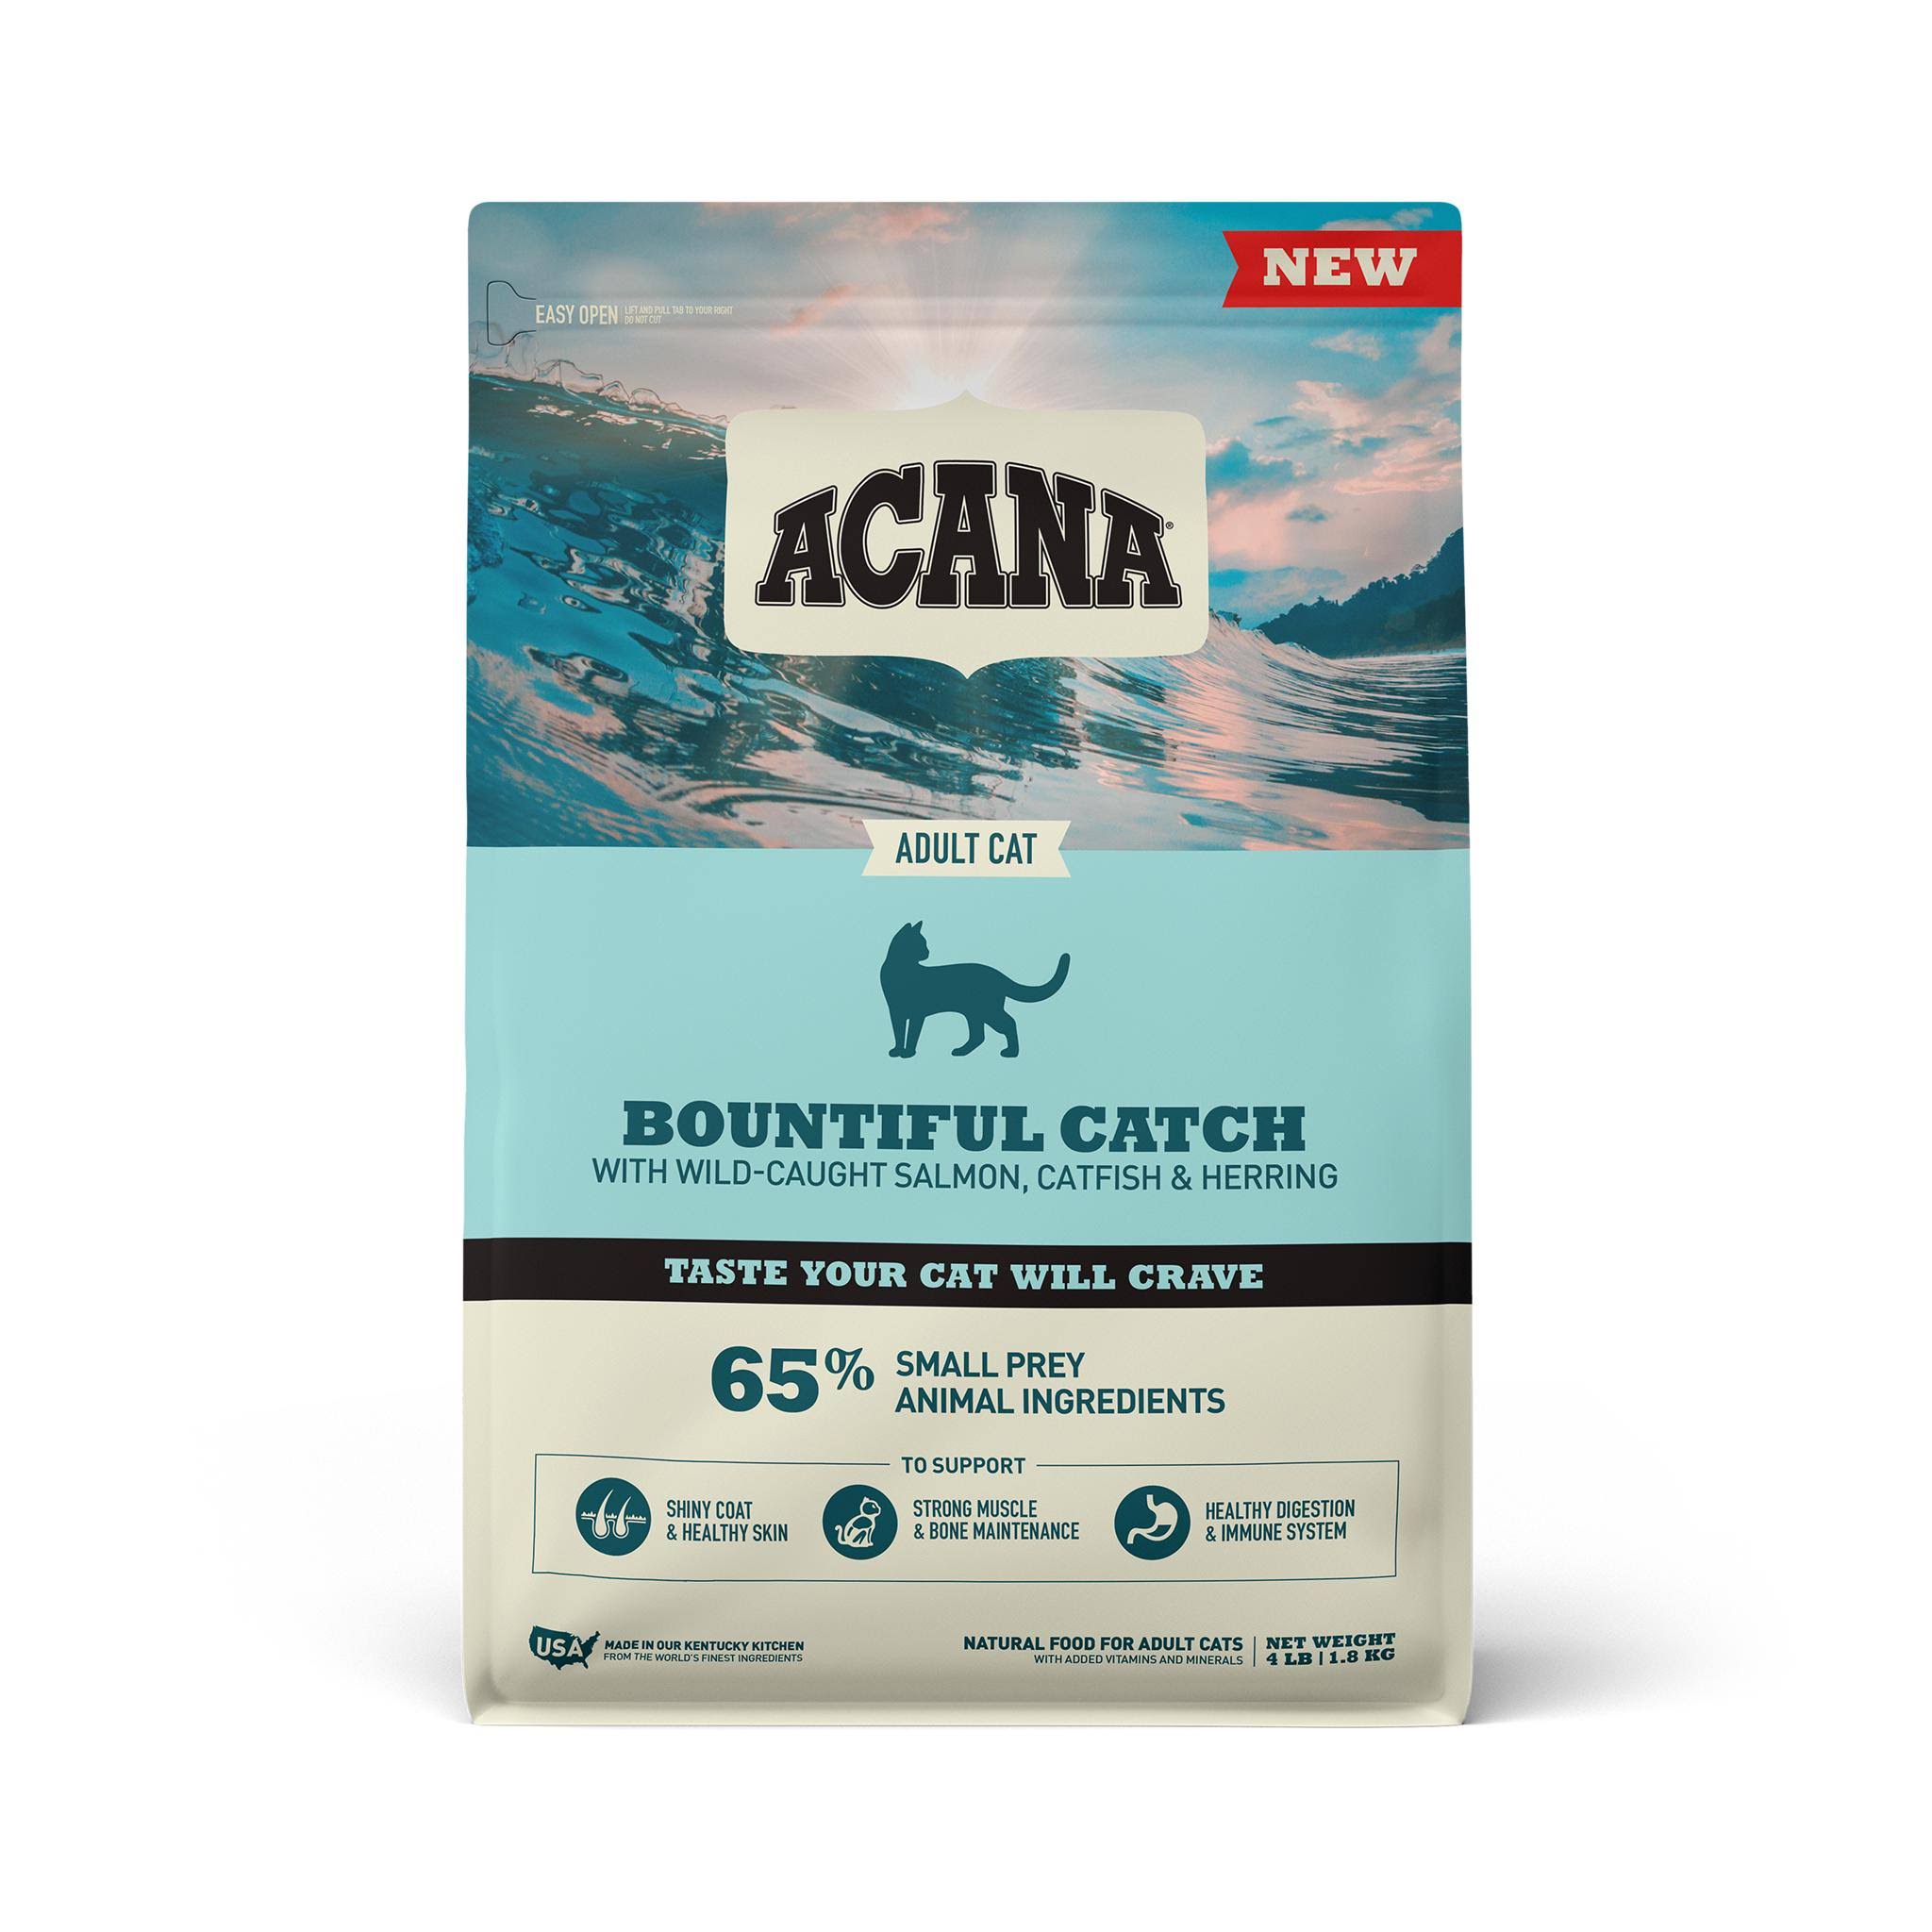 Acana Dry Cat Food, Bountiful Catch, Salmon, Catfish, and Herring, 4lb